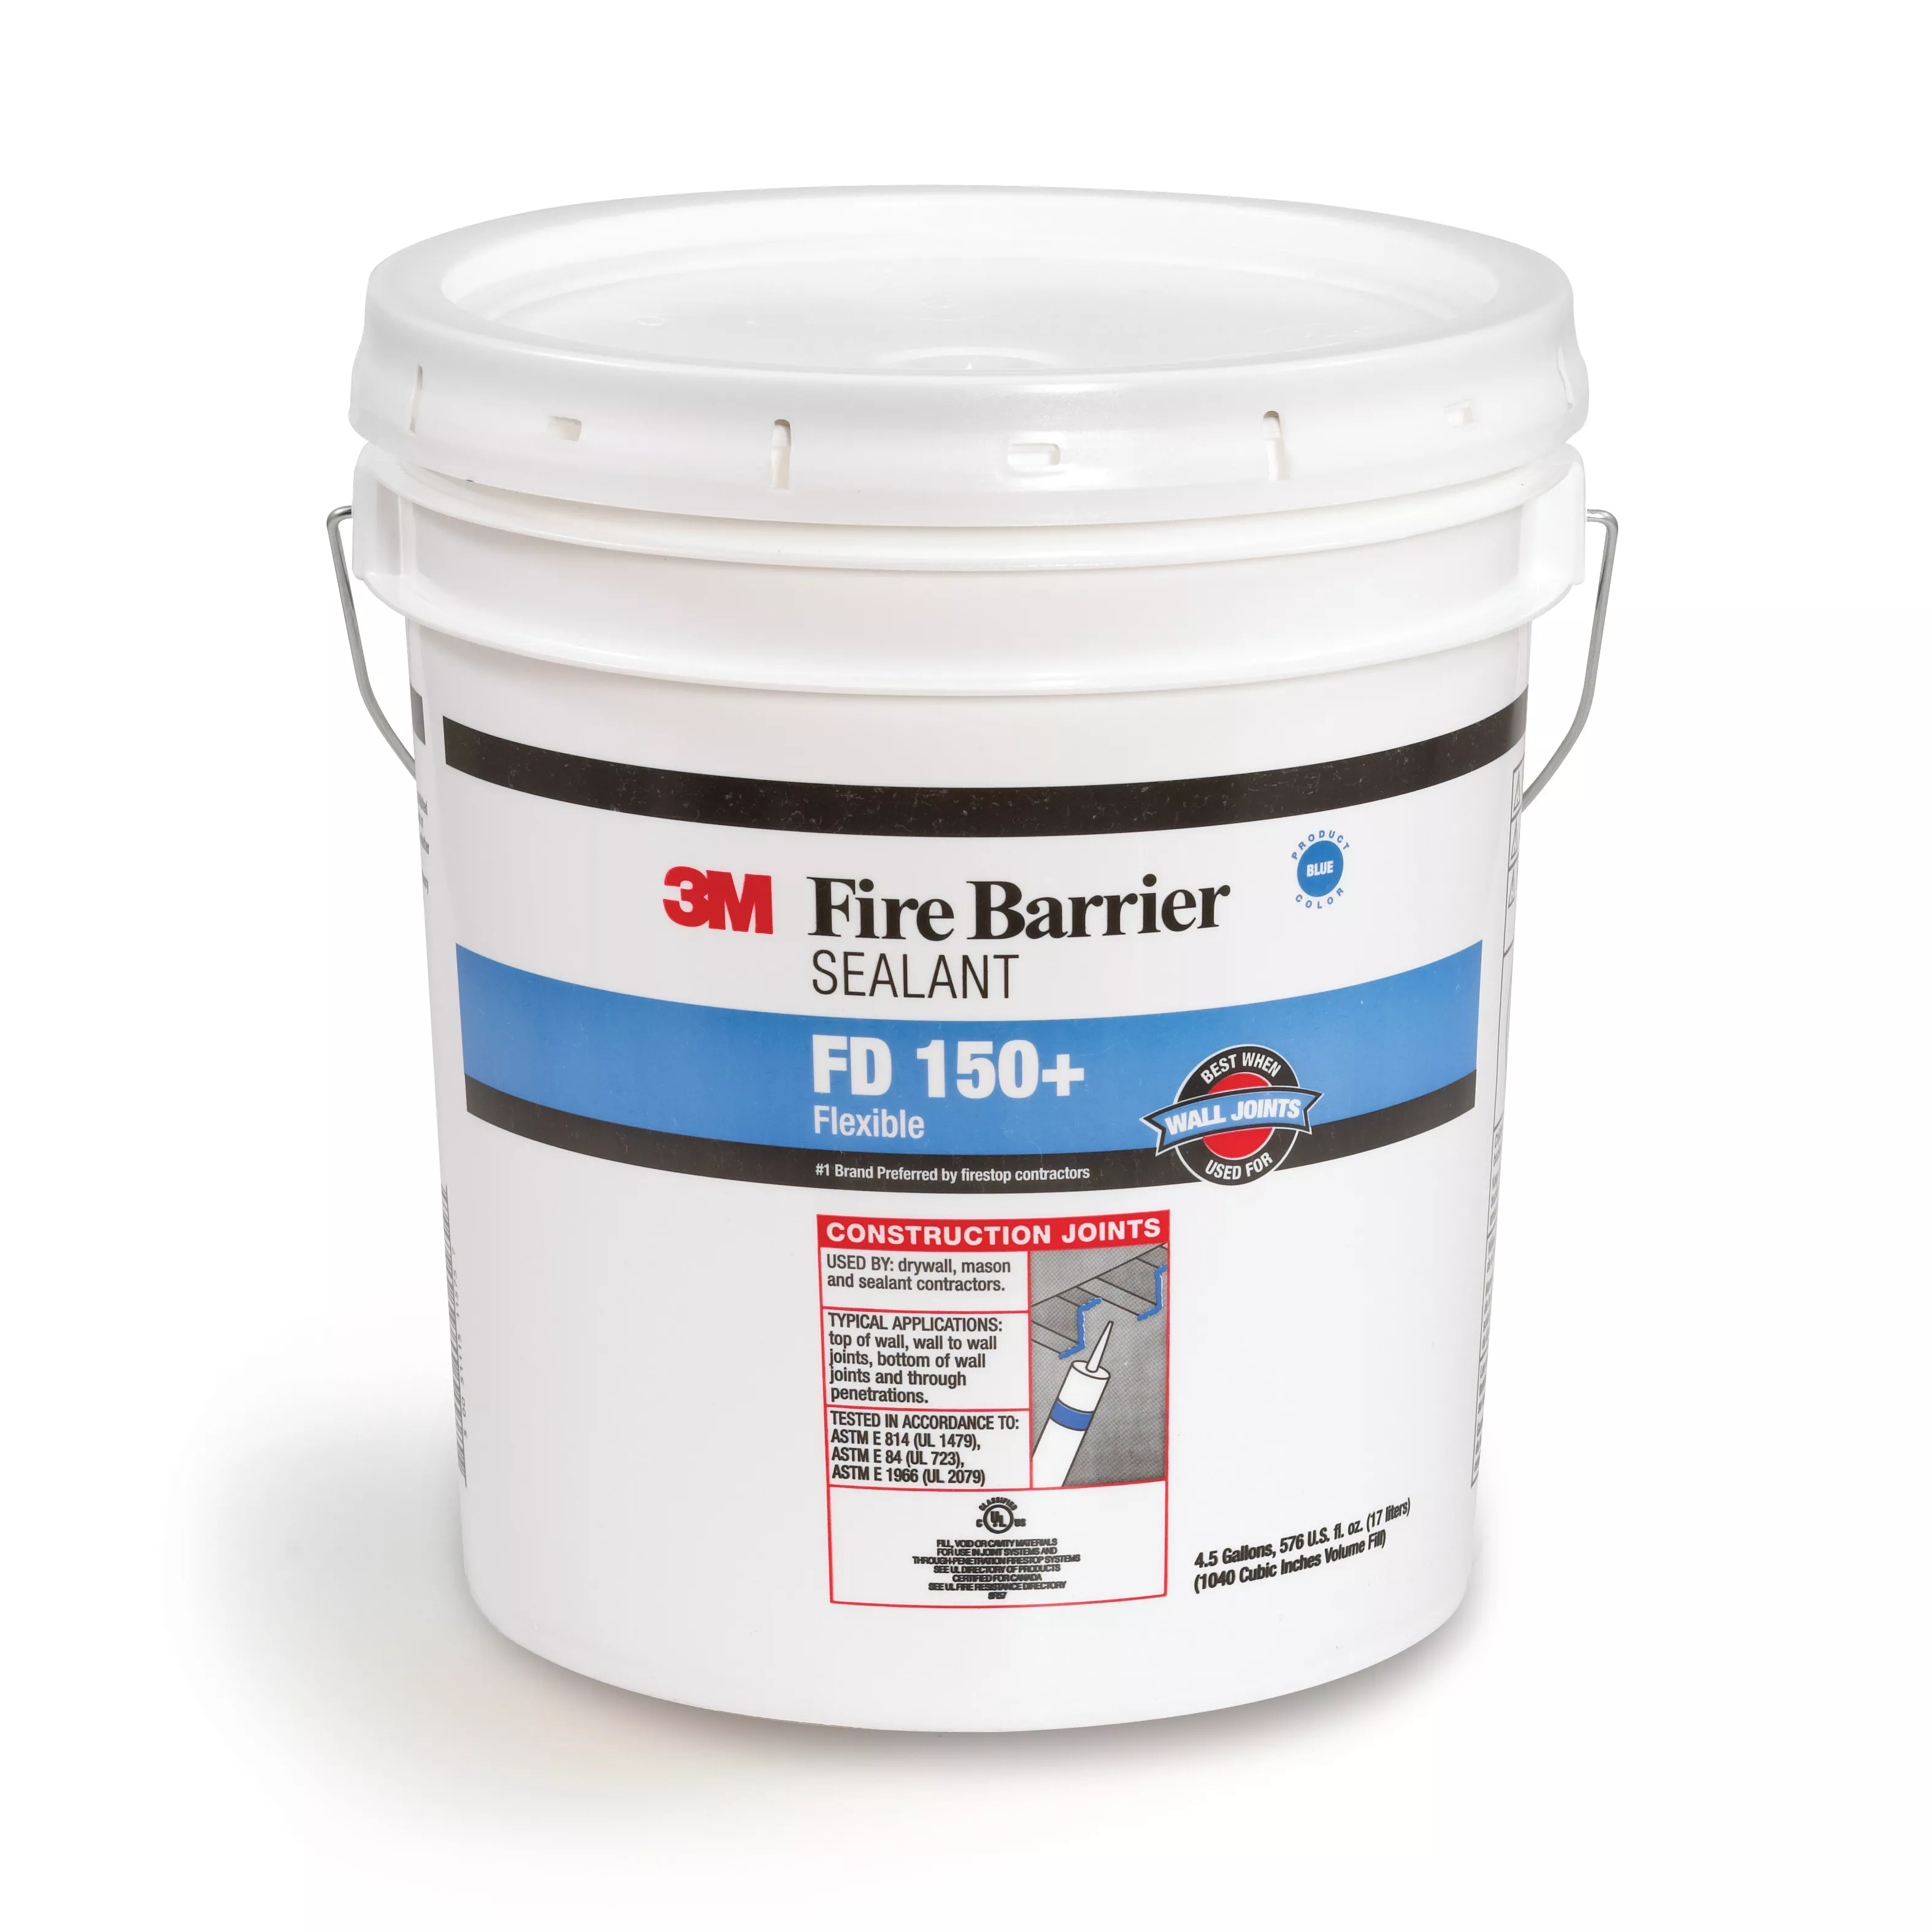 3M™ Fire Barrier Sealant FD 150+, Blue, 4.5 Gallon (Pail), 1 Each/Drum